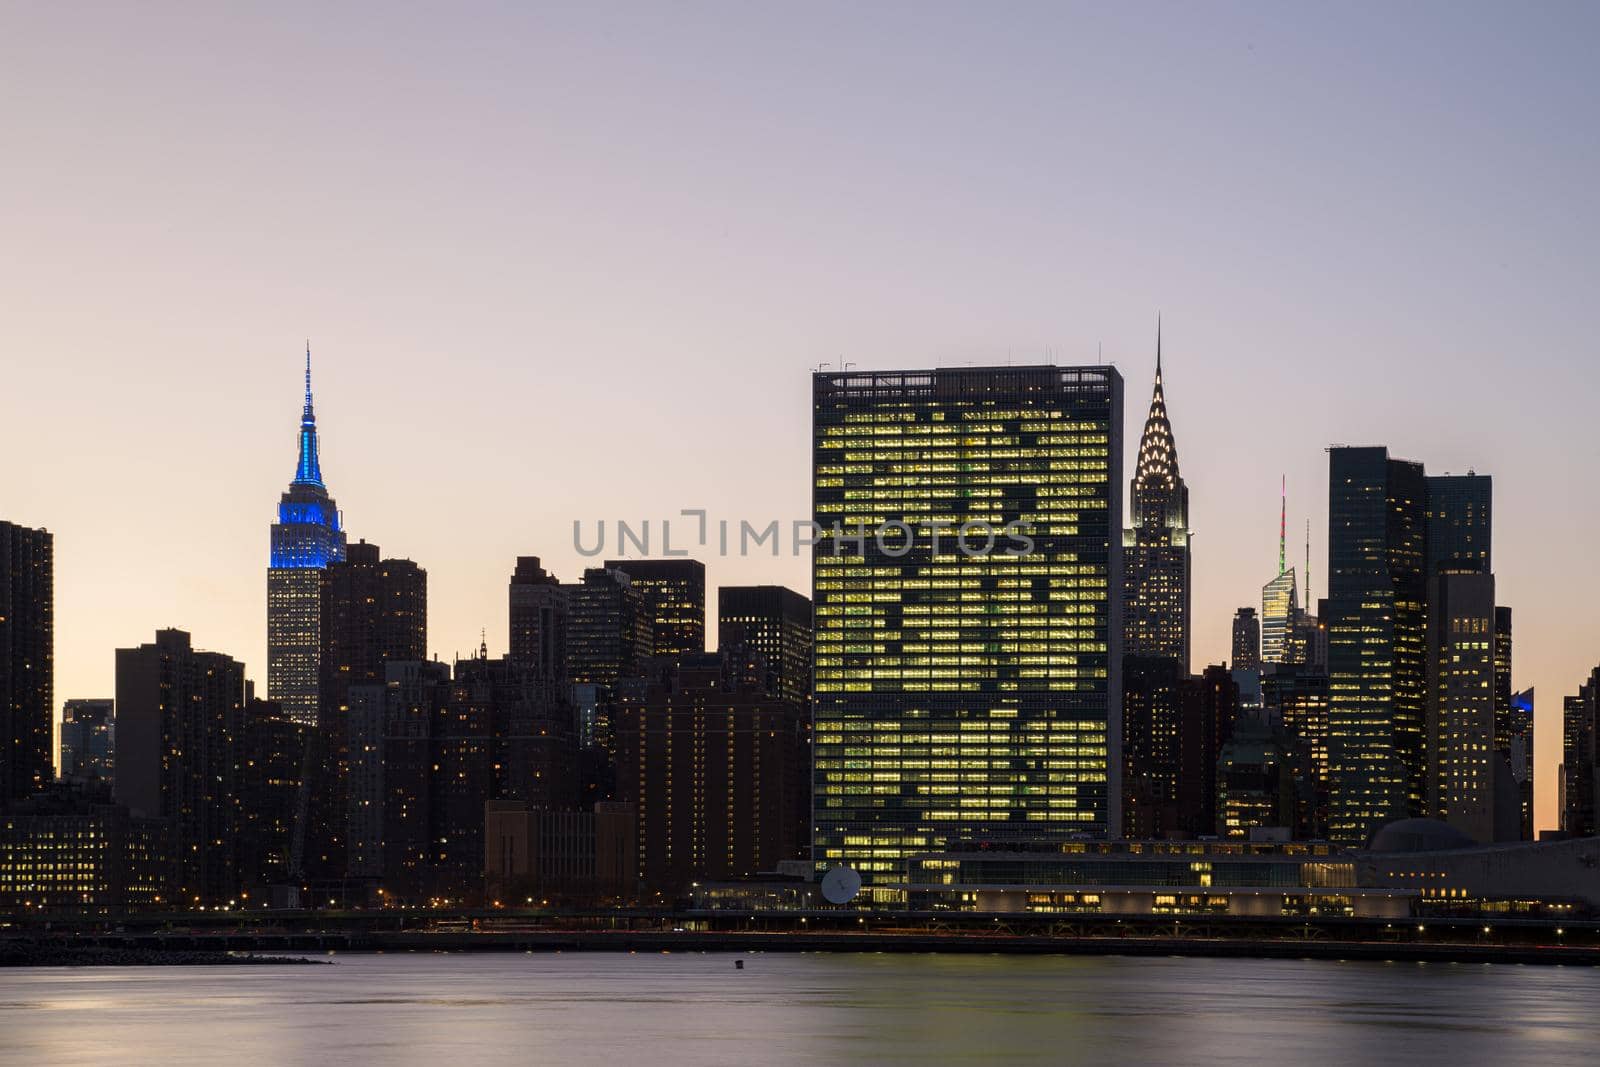 New York, United States of America - November 11, 2016: Skyline of midtown Manhattan in New York City by night